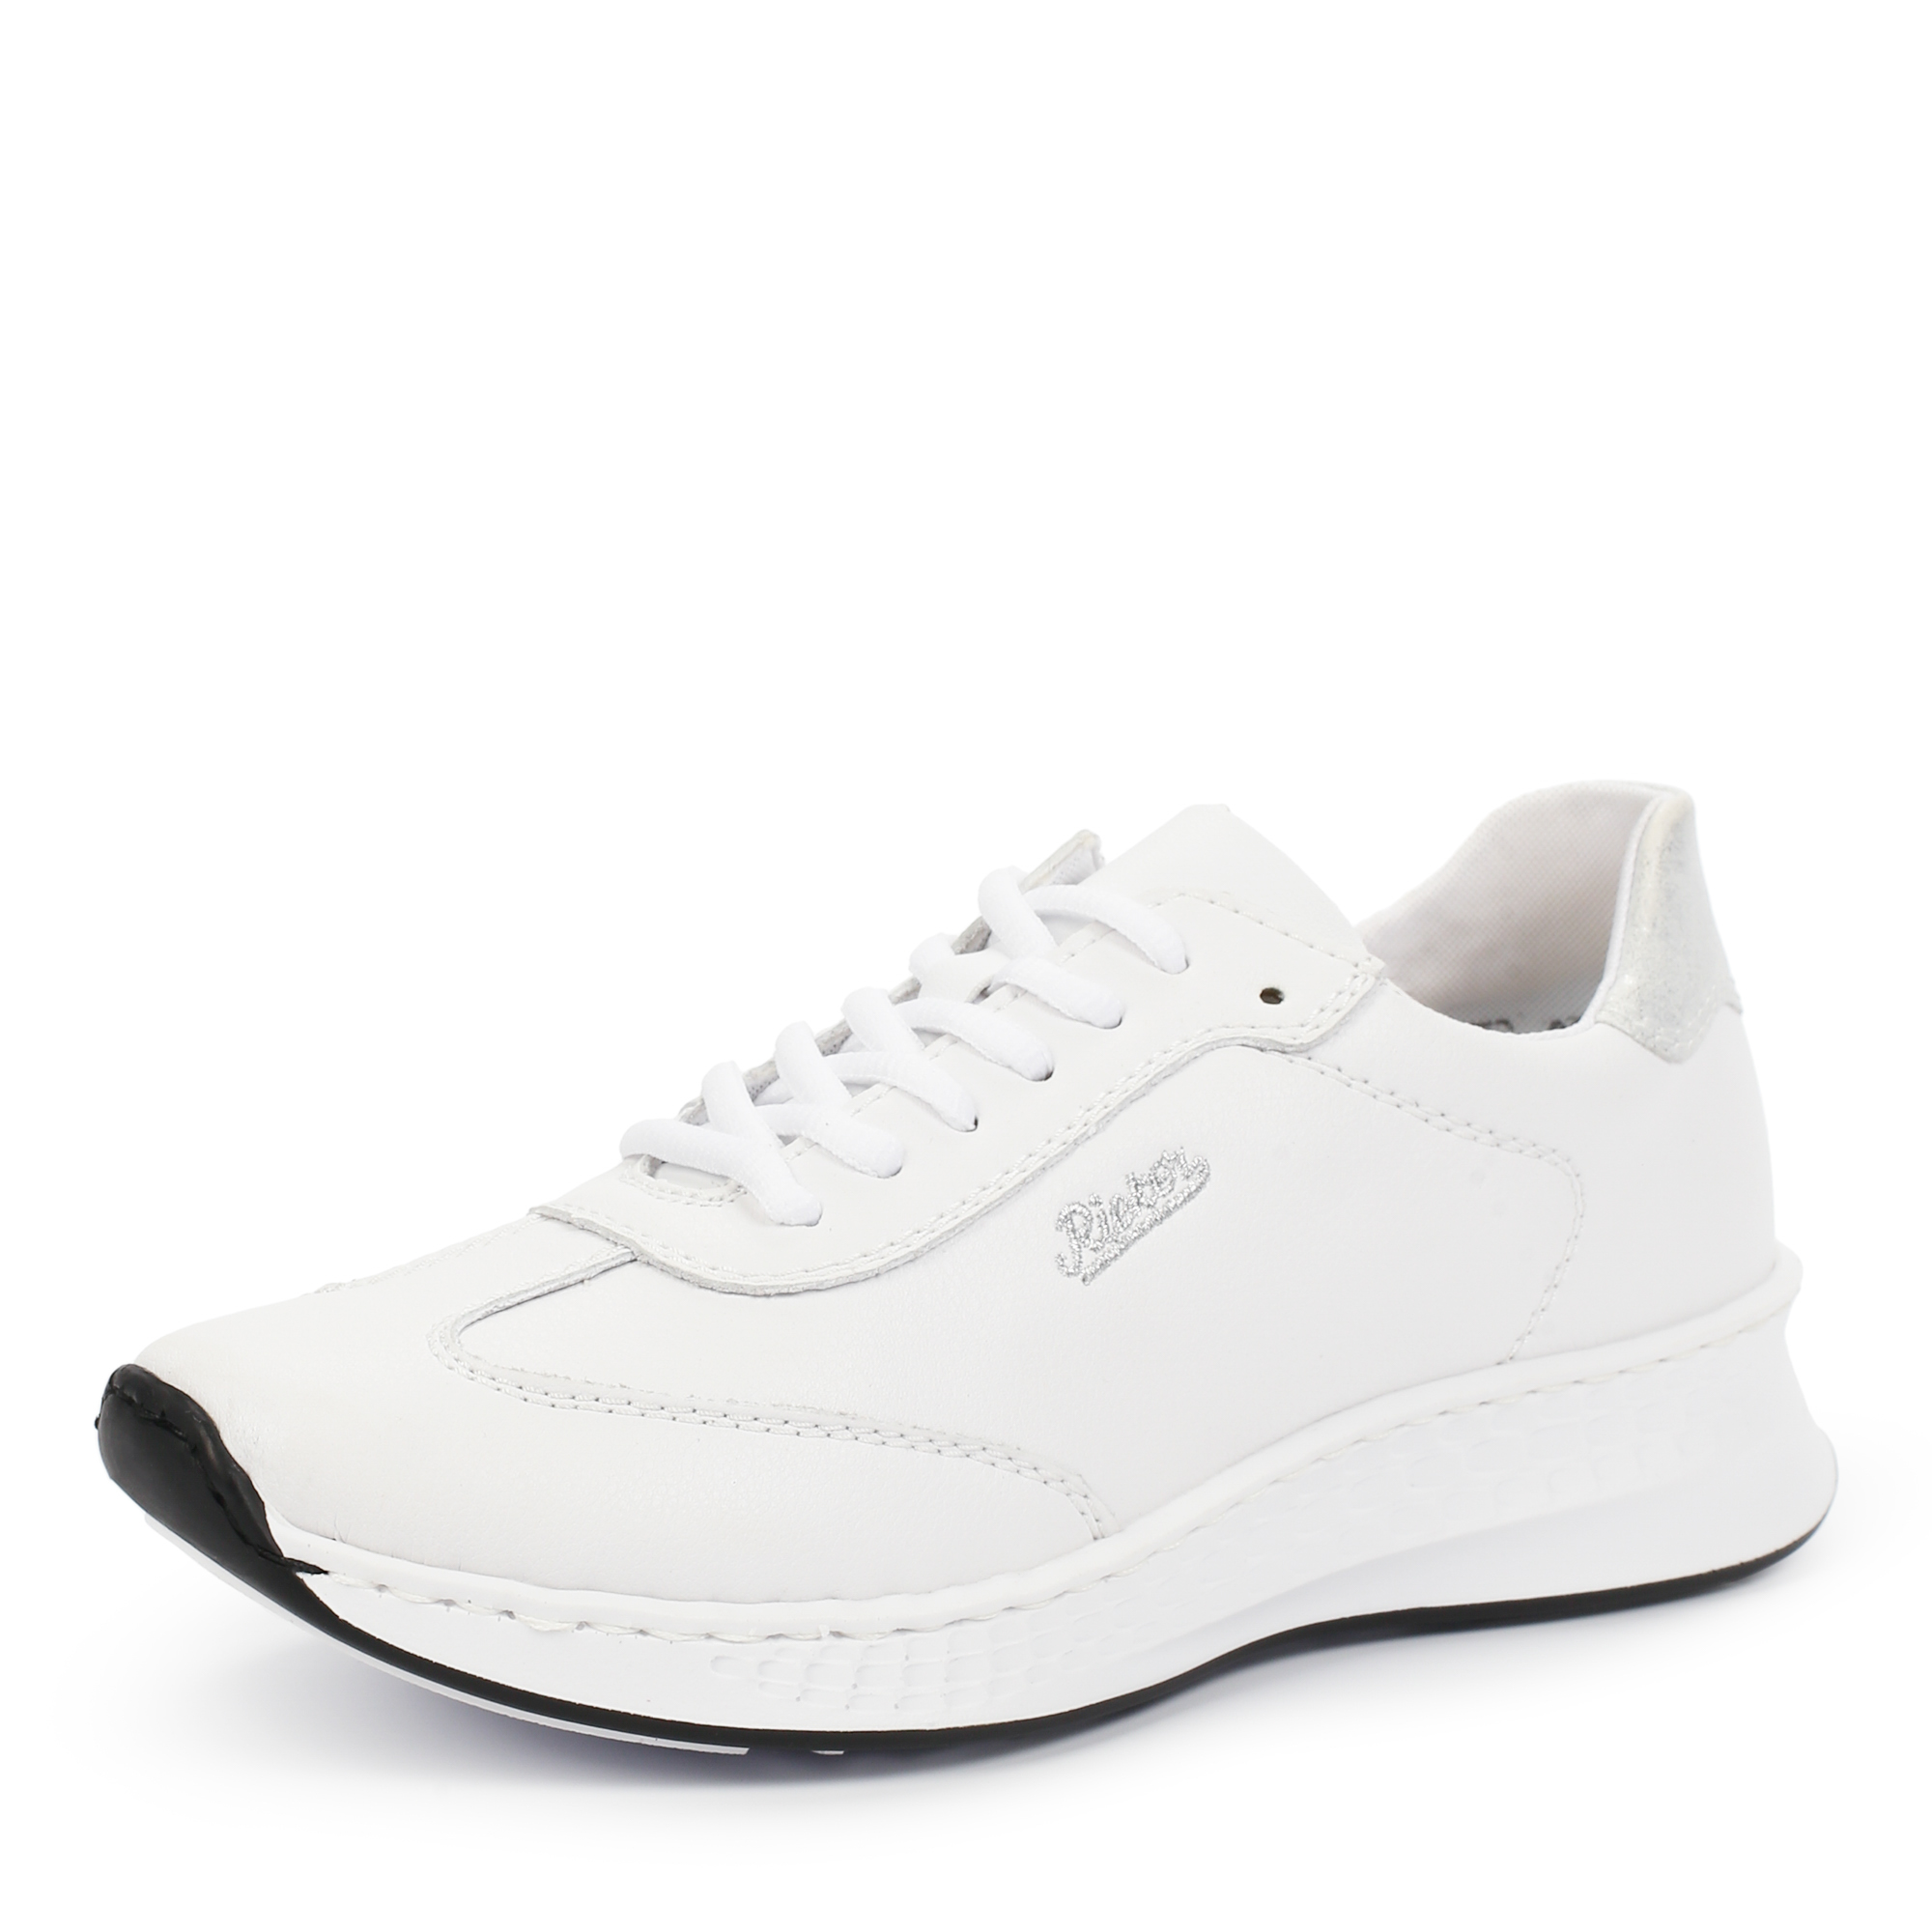 Туфли Rieker N5627-80, цвет белый, размер 38 - фото 2